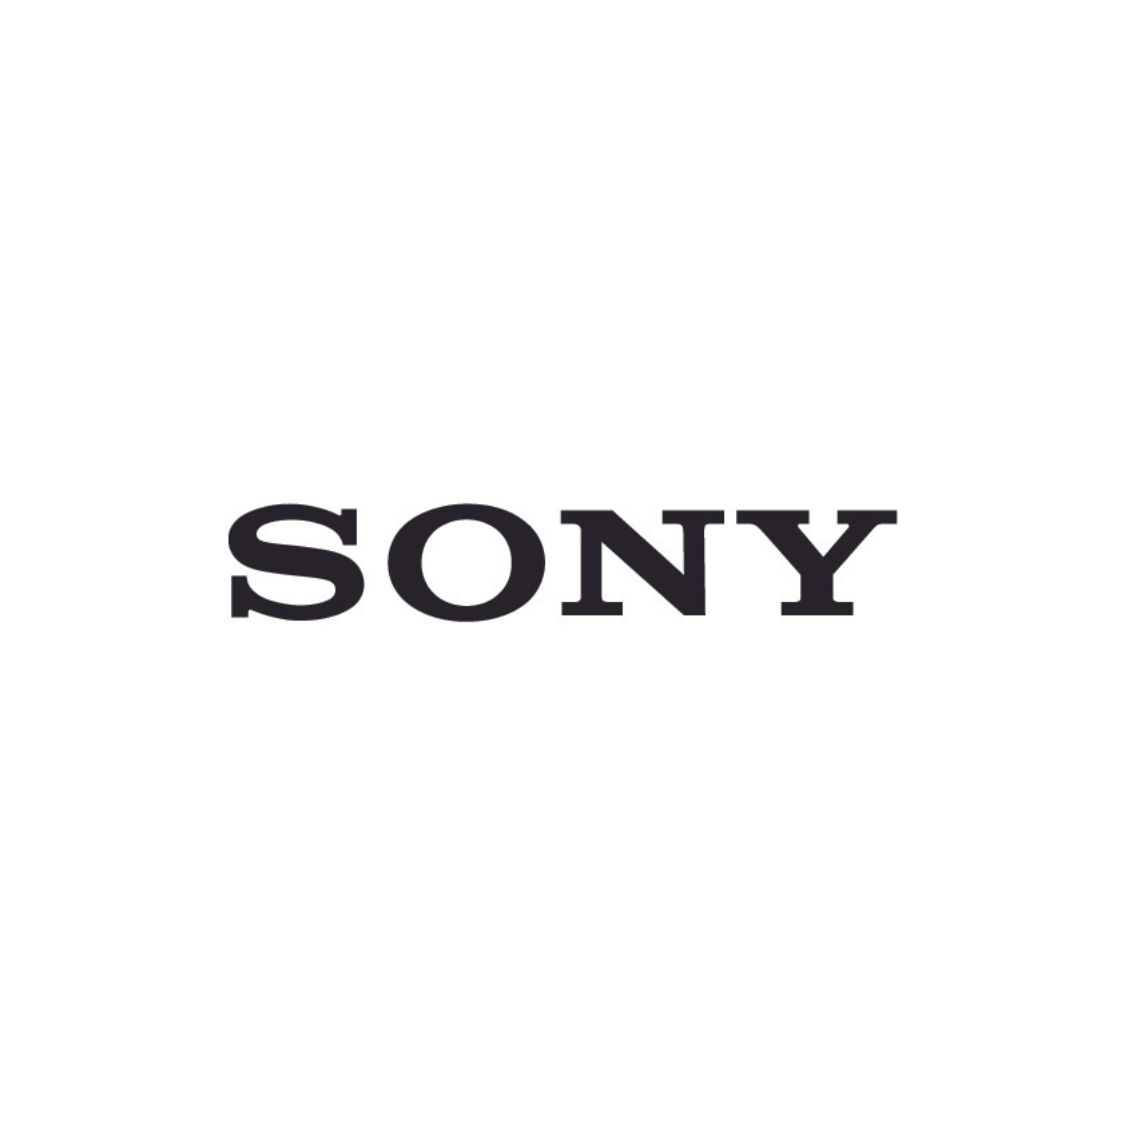 Sony Logo.jpg